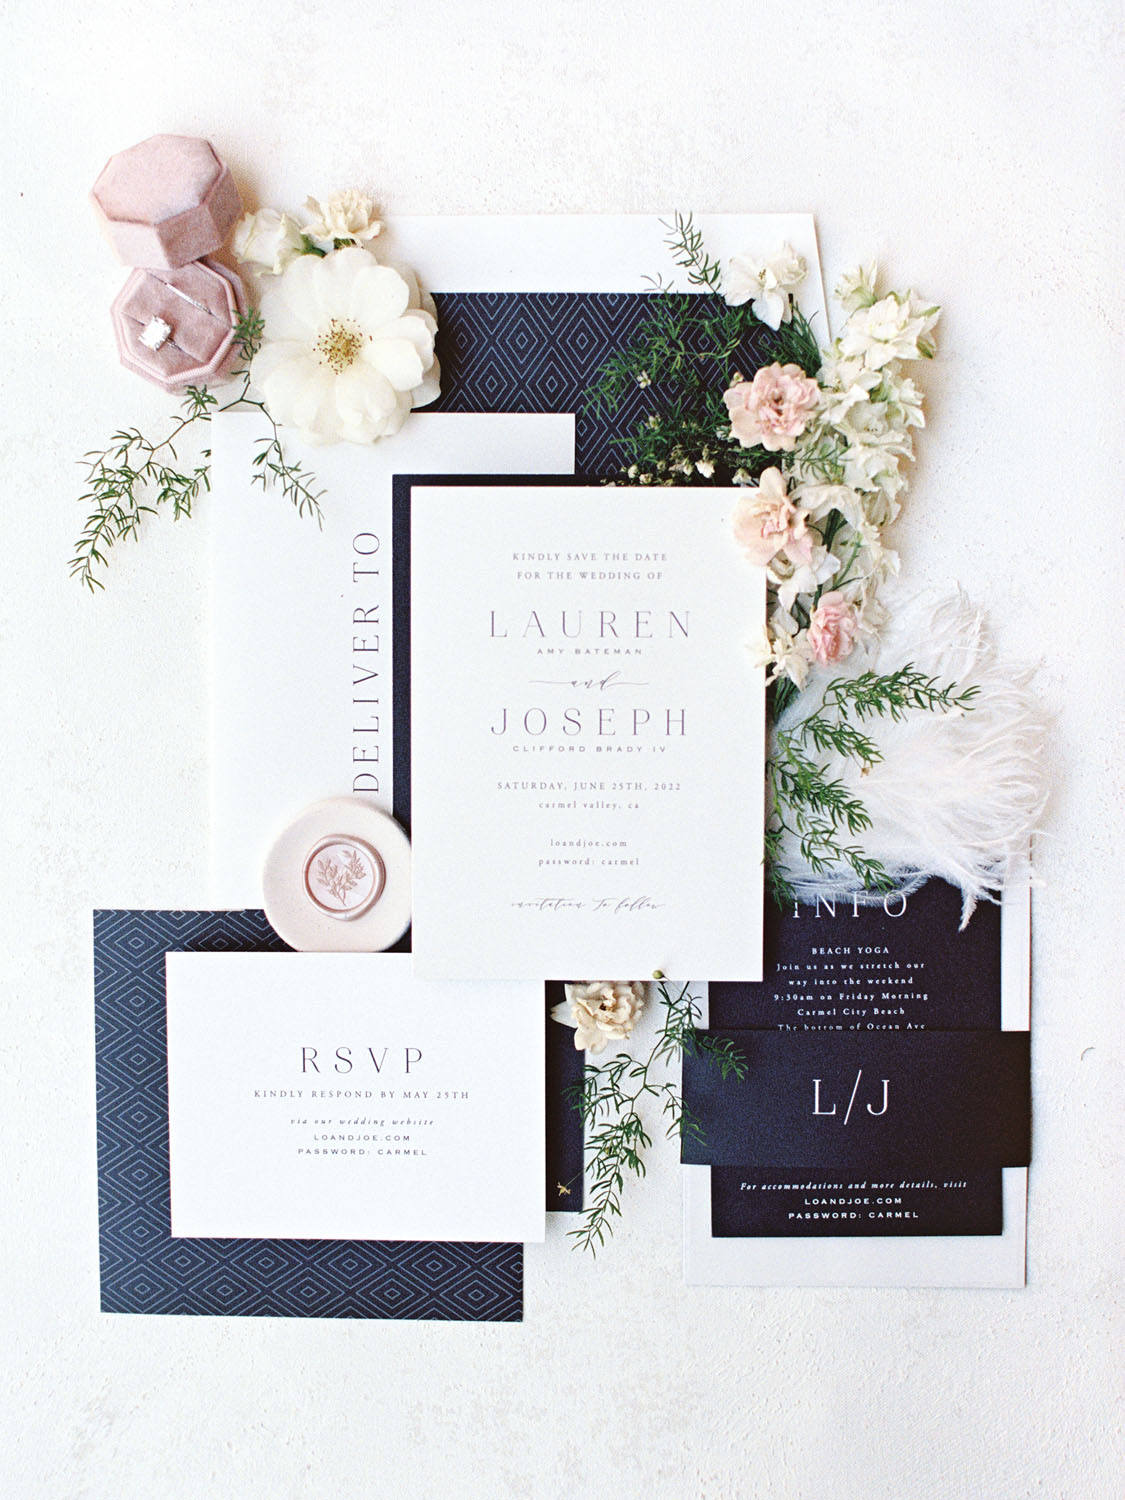 Formal black and white wedding invitations